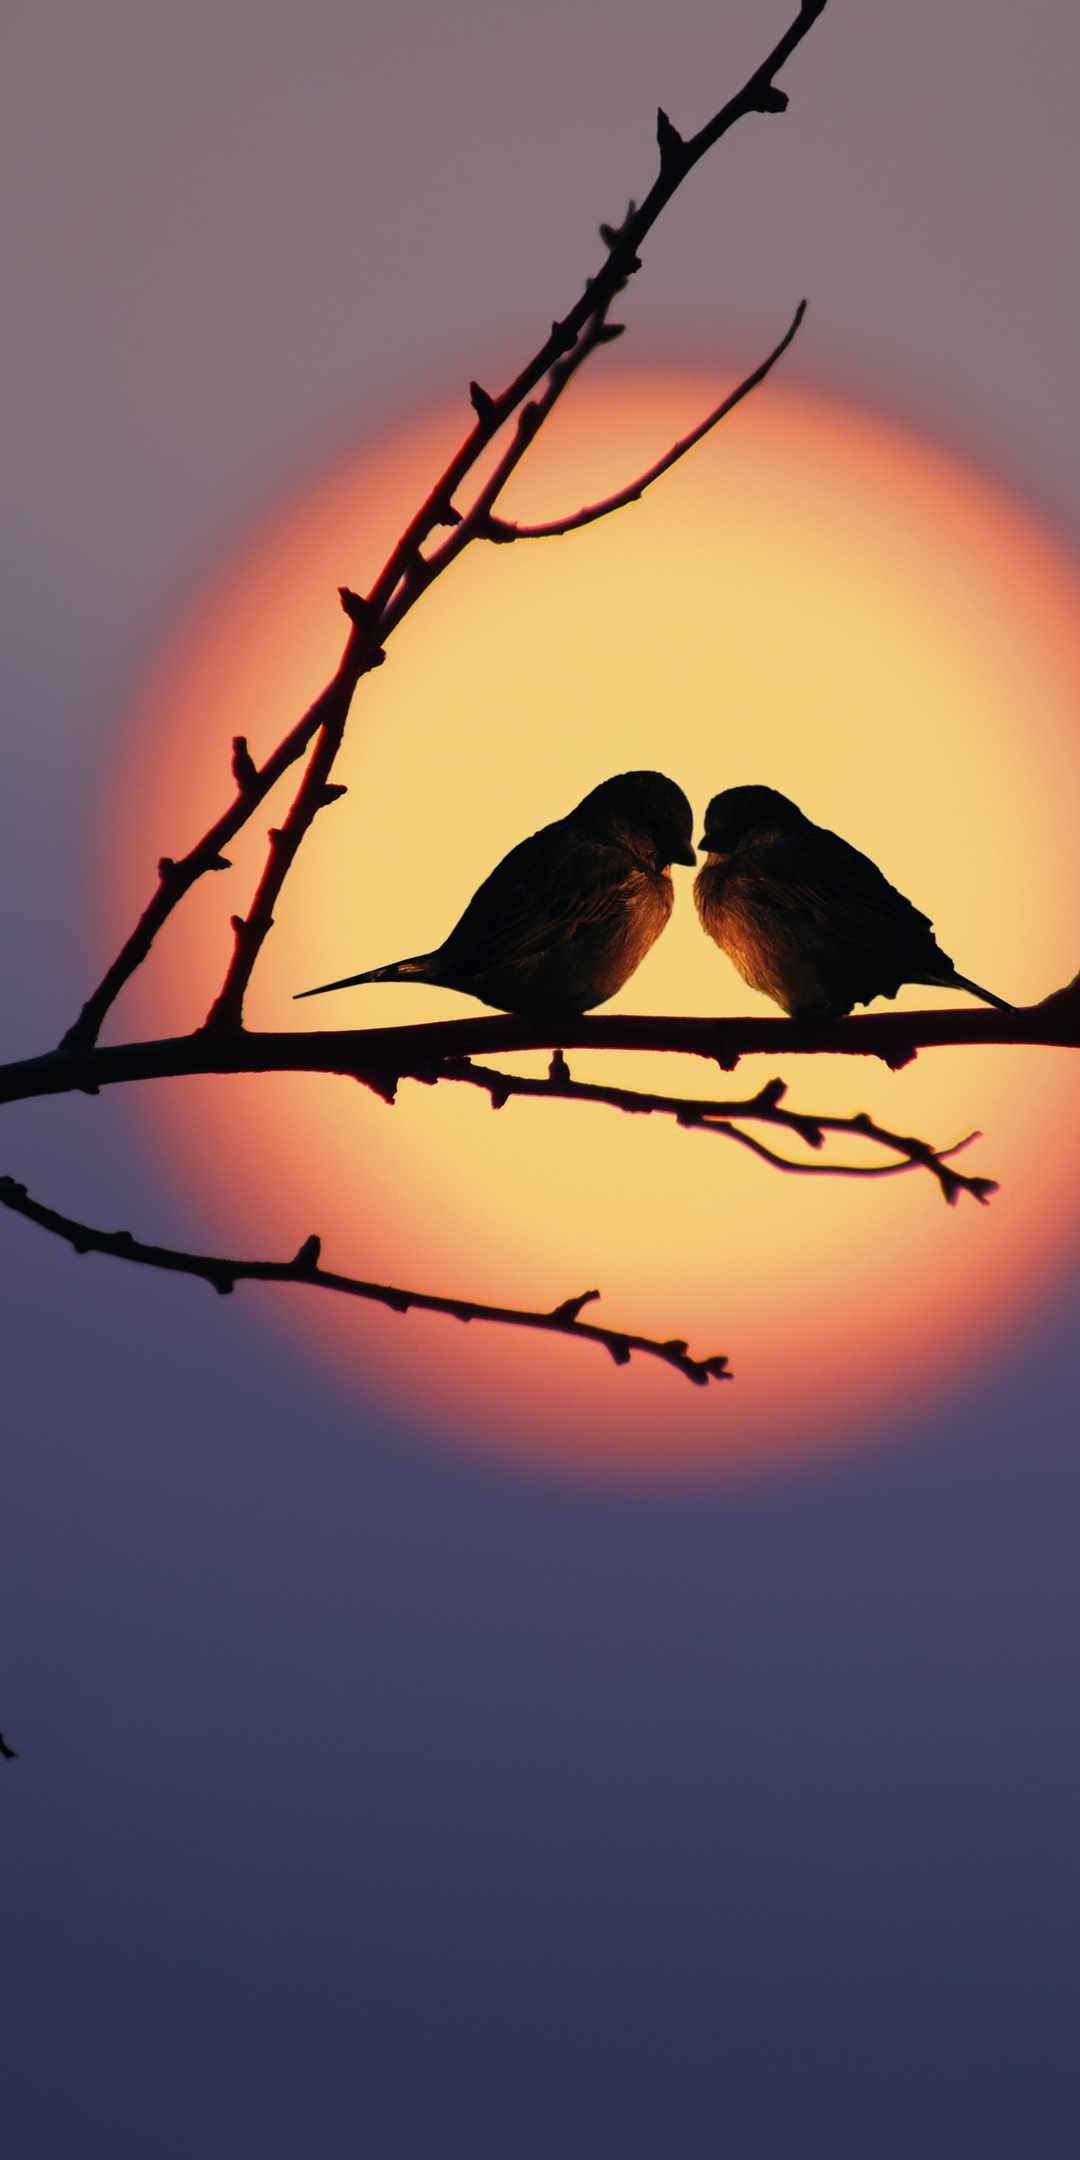 Image: Birds, couple, branch, sunset, evening, sun